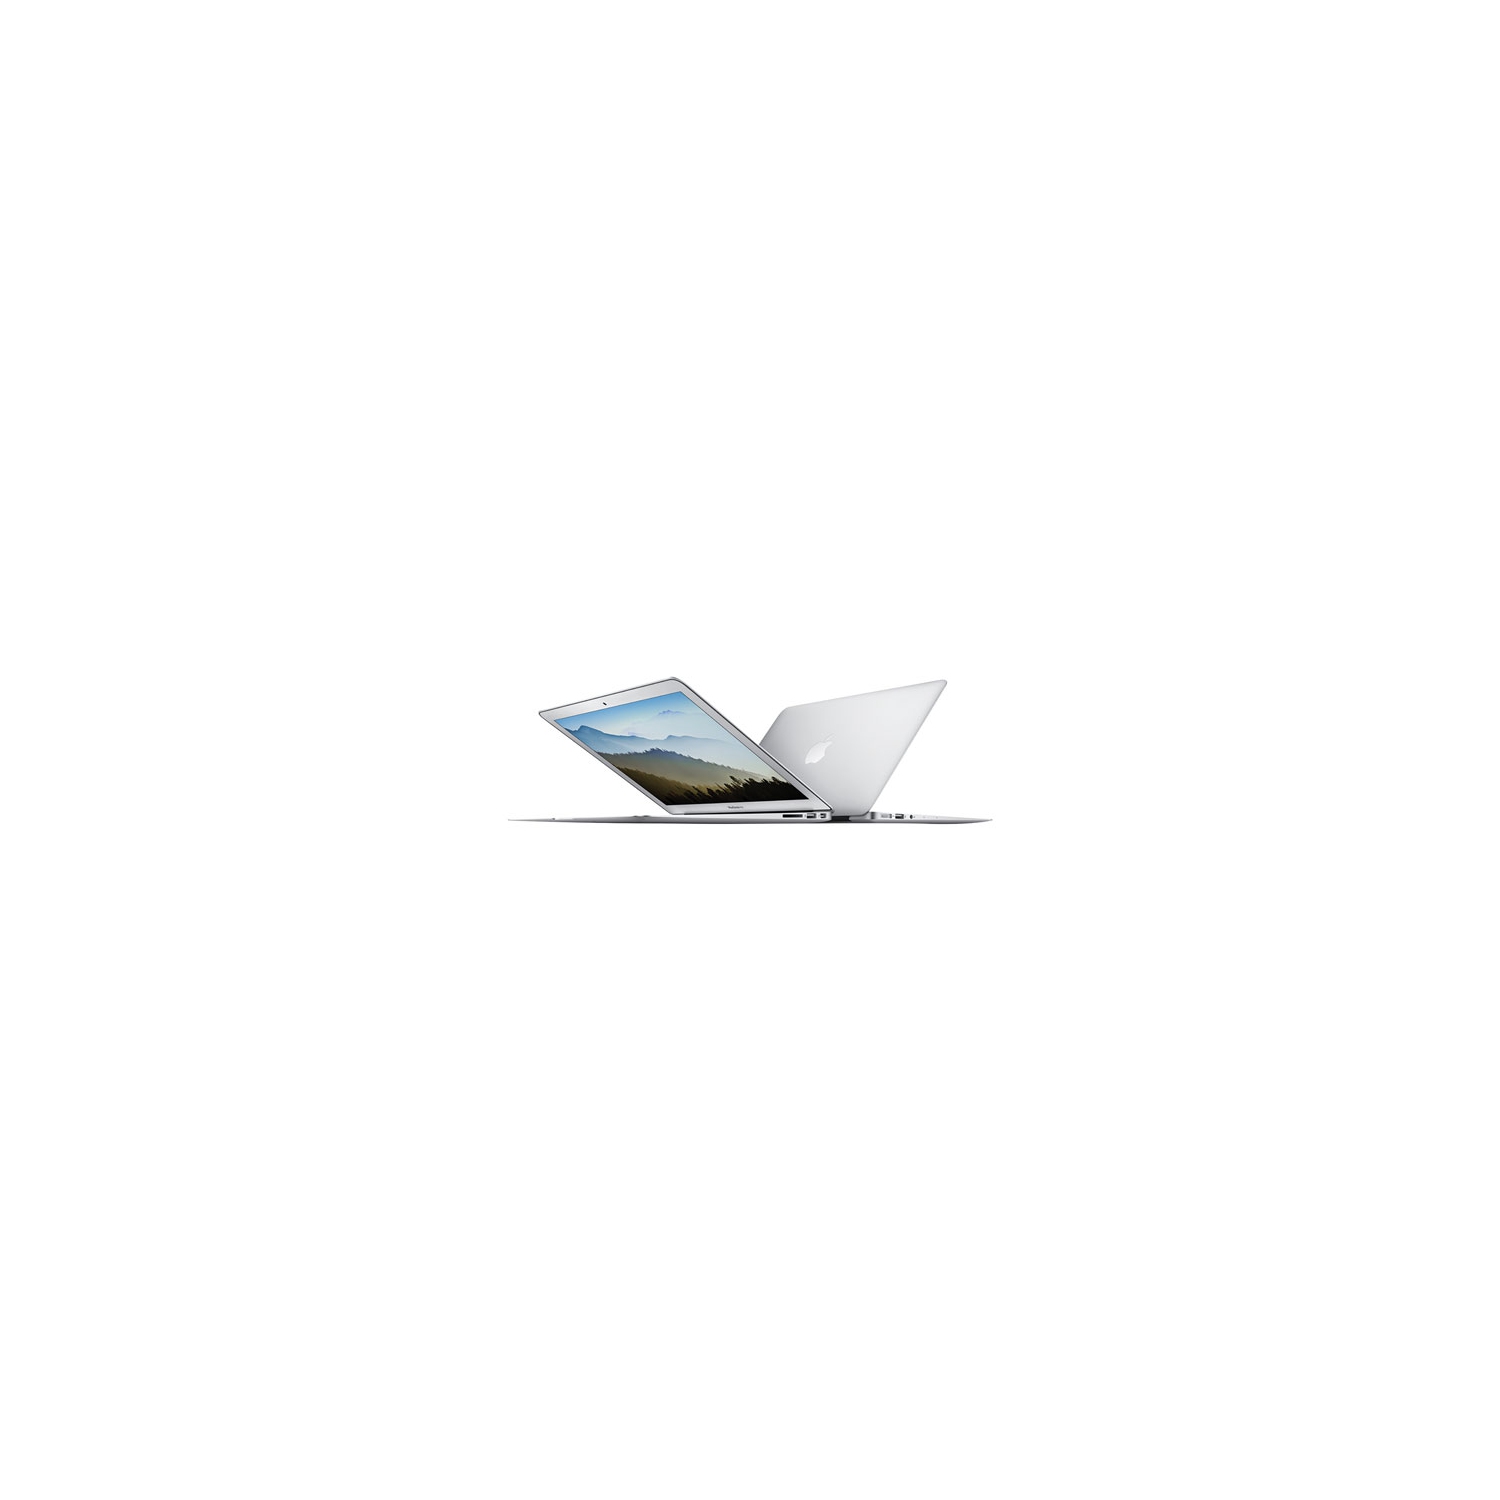 Apple MacBook Air 13.3" Dual-Core Intel Core i5 1.6GHz 128GB SSD Laptop (2015 Model)- English - Silver - Open Box